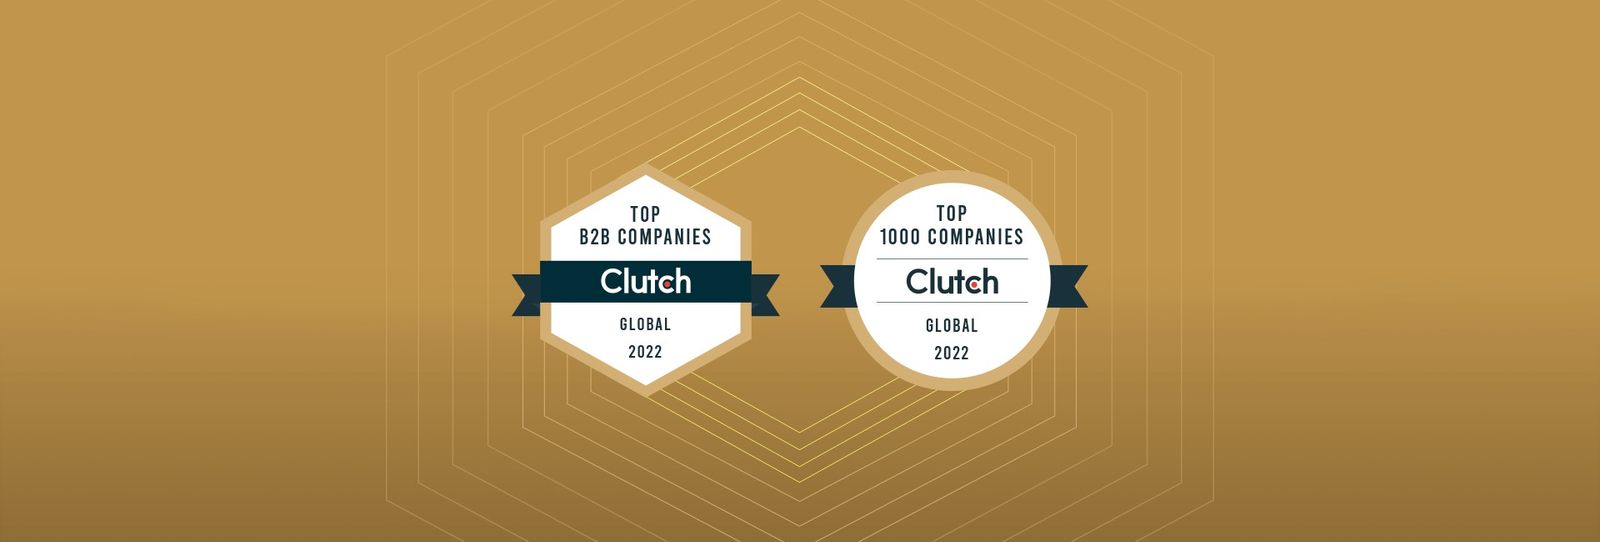 ELANIIN is a Global Leader in Development & IT Services 2022, by Clutch